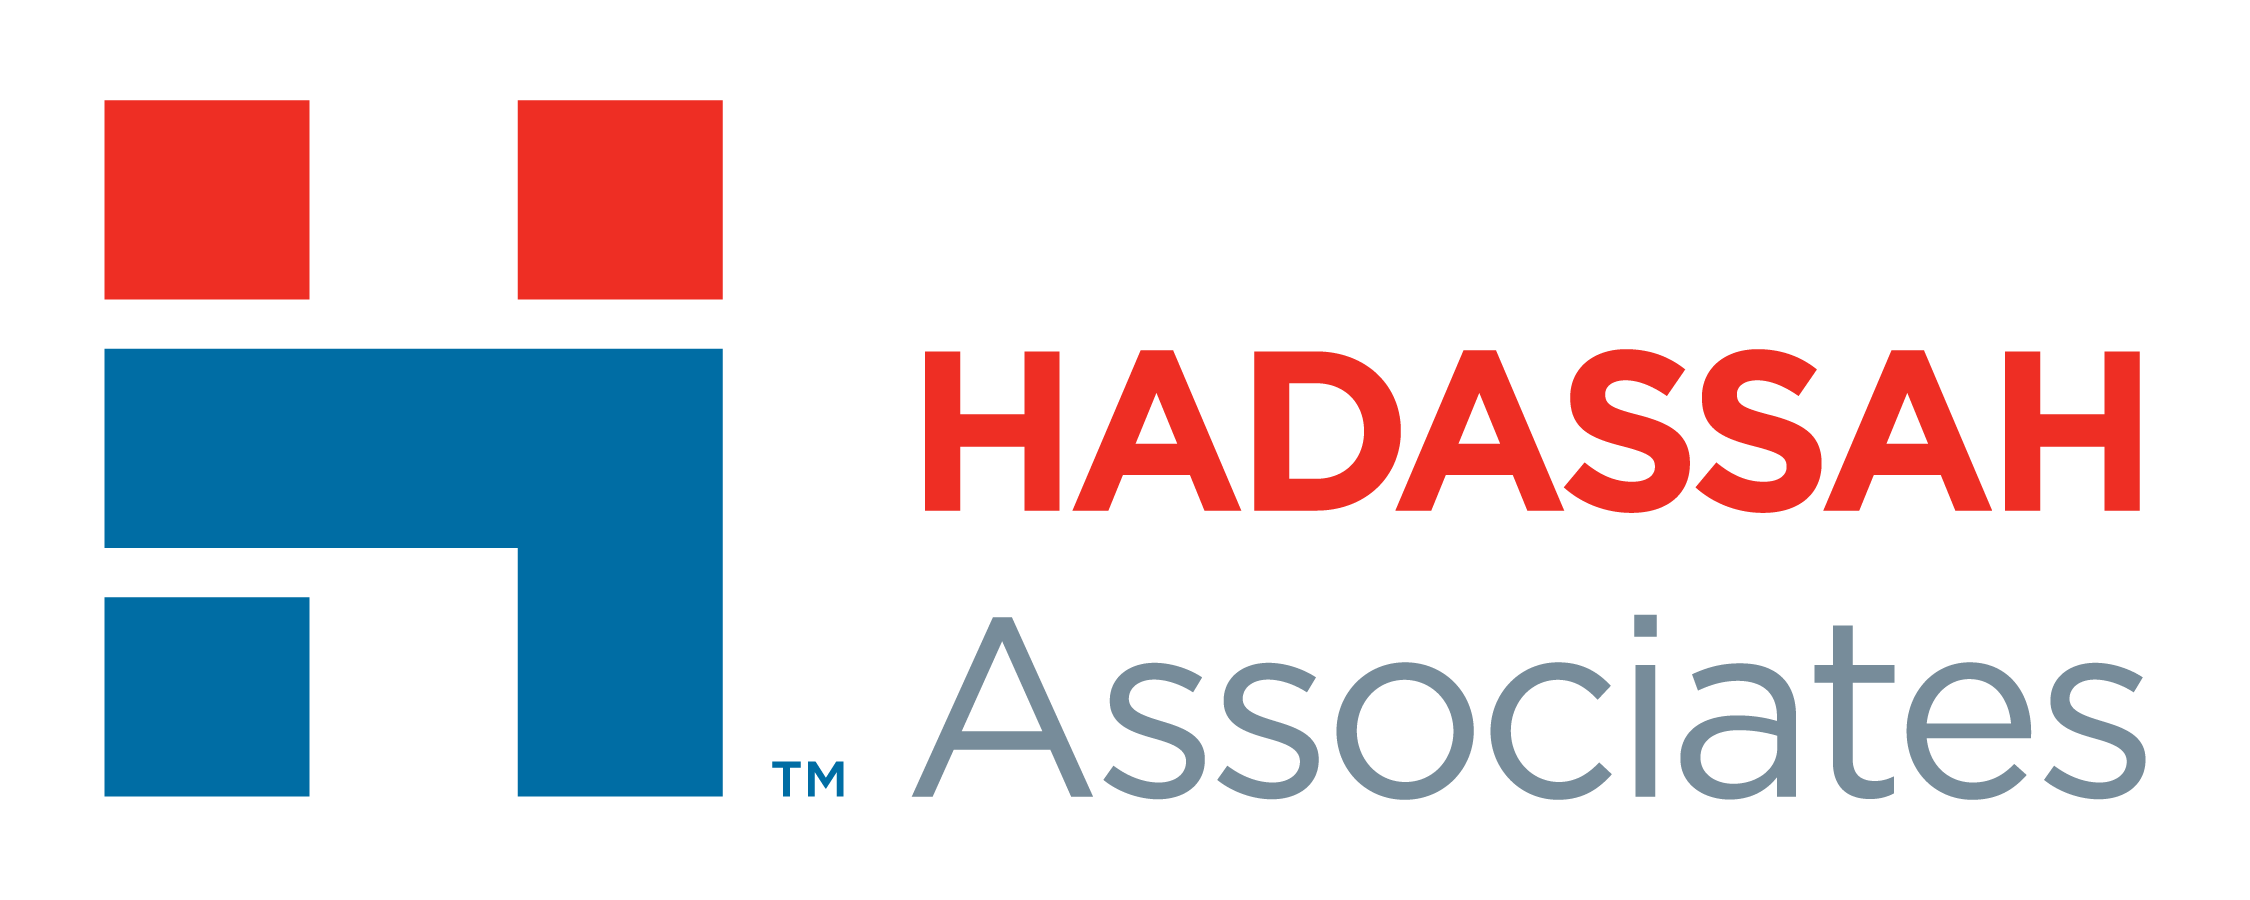 Hadassah Logo - Associates Poker Tournament. Hadassah, The Women's Zionist Org